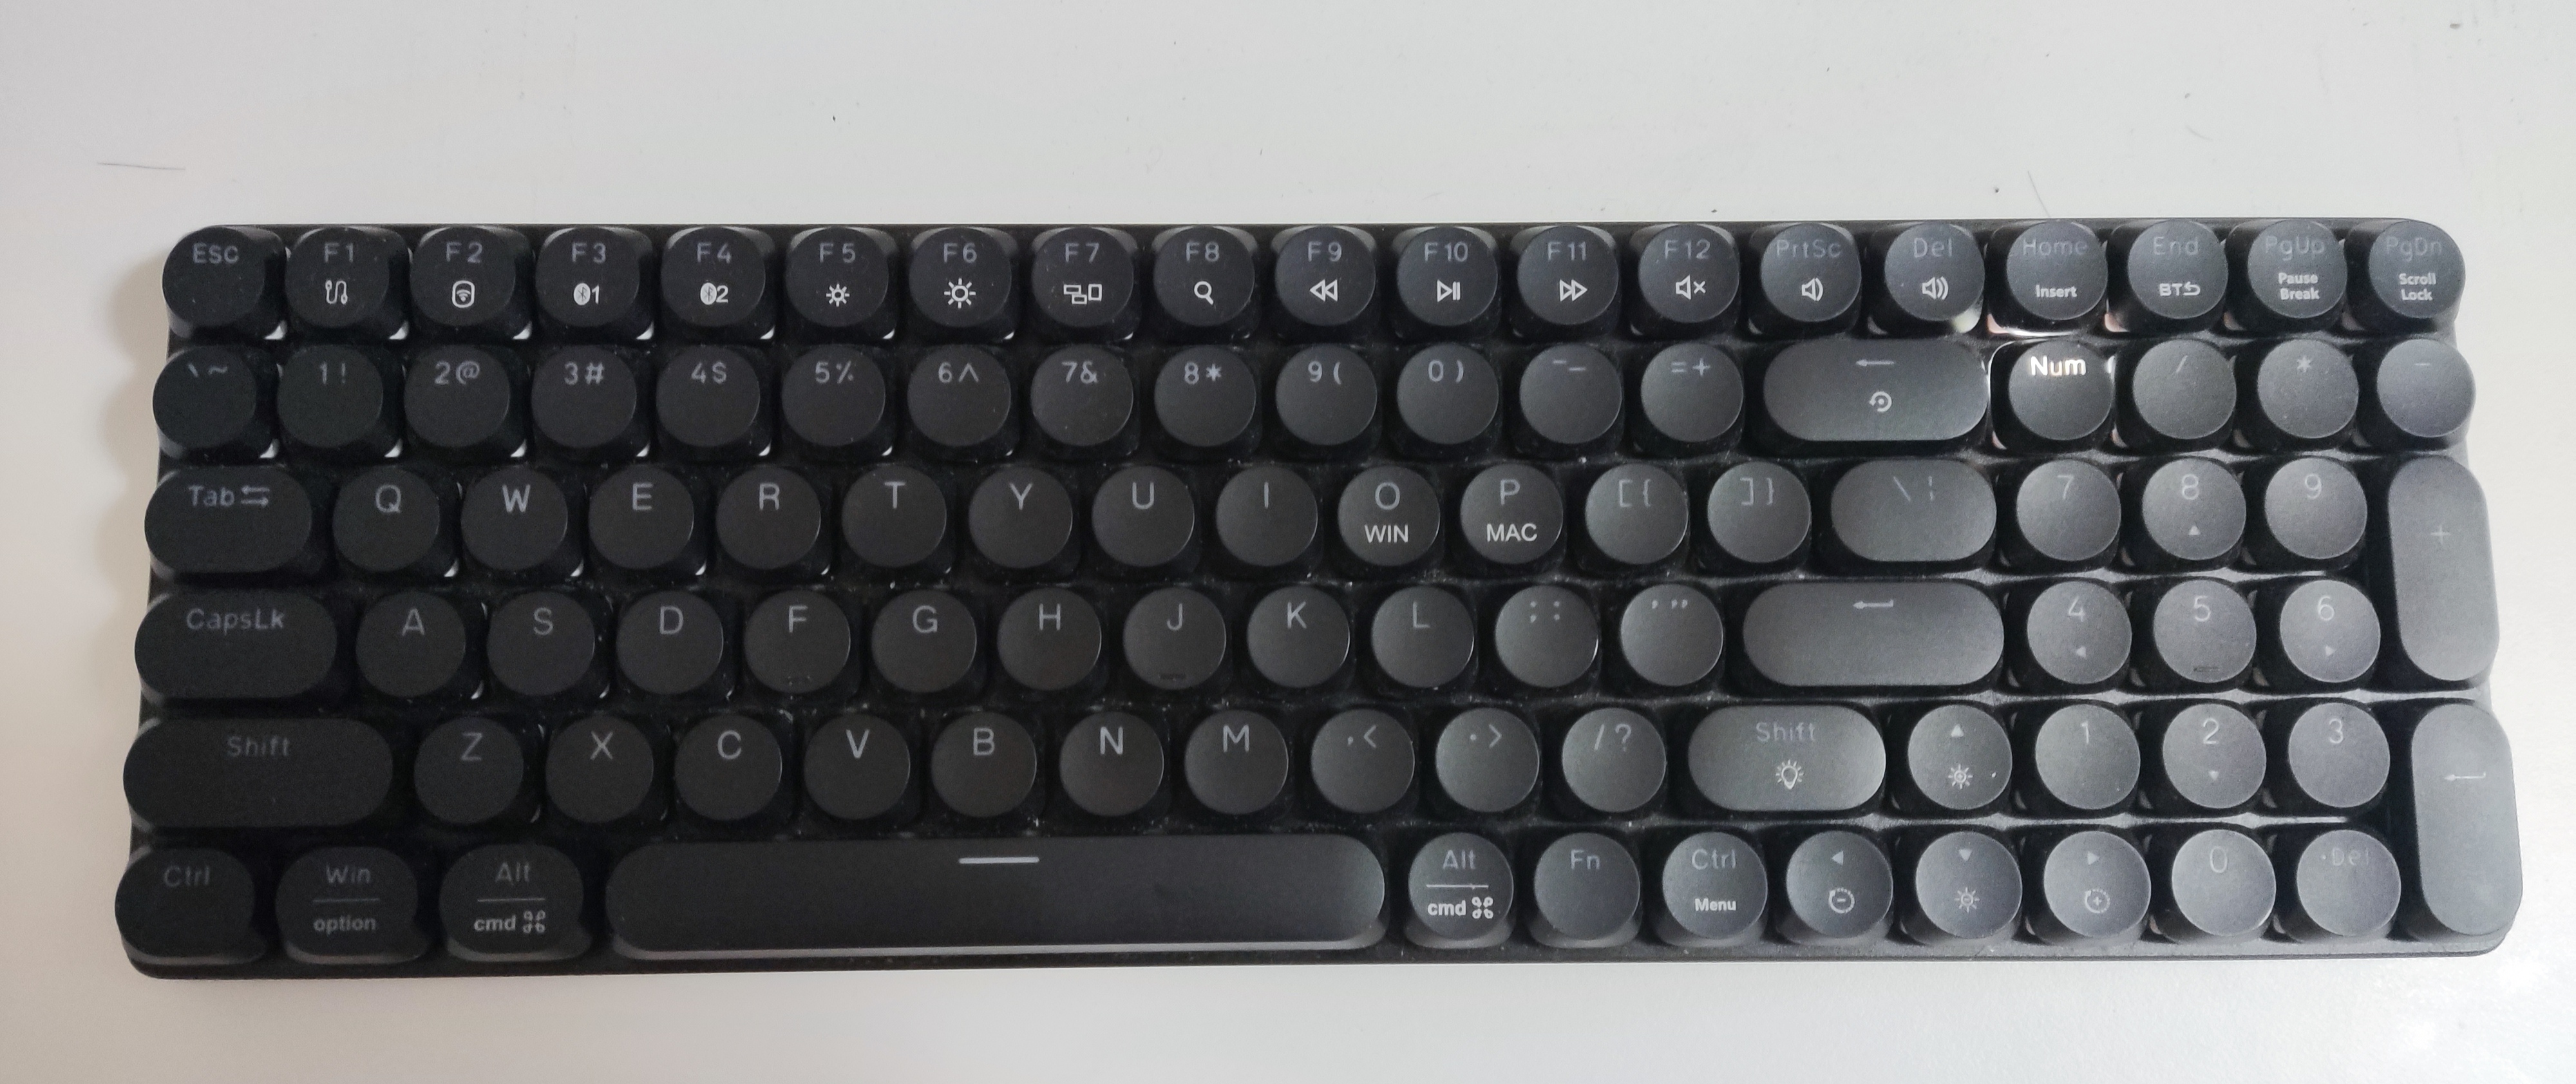 ./img/my-keyboard.jpg